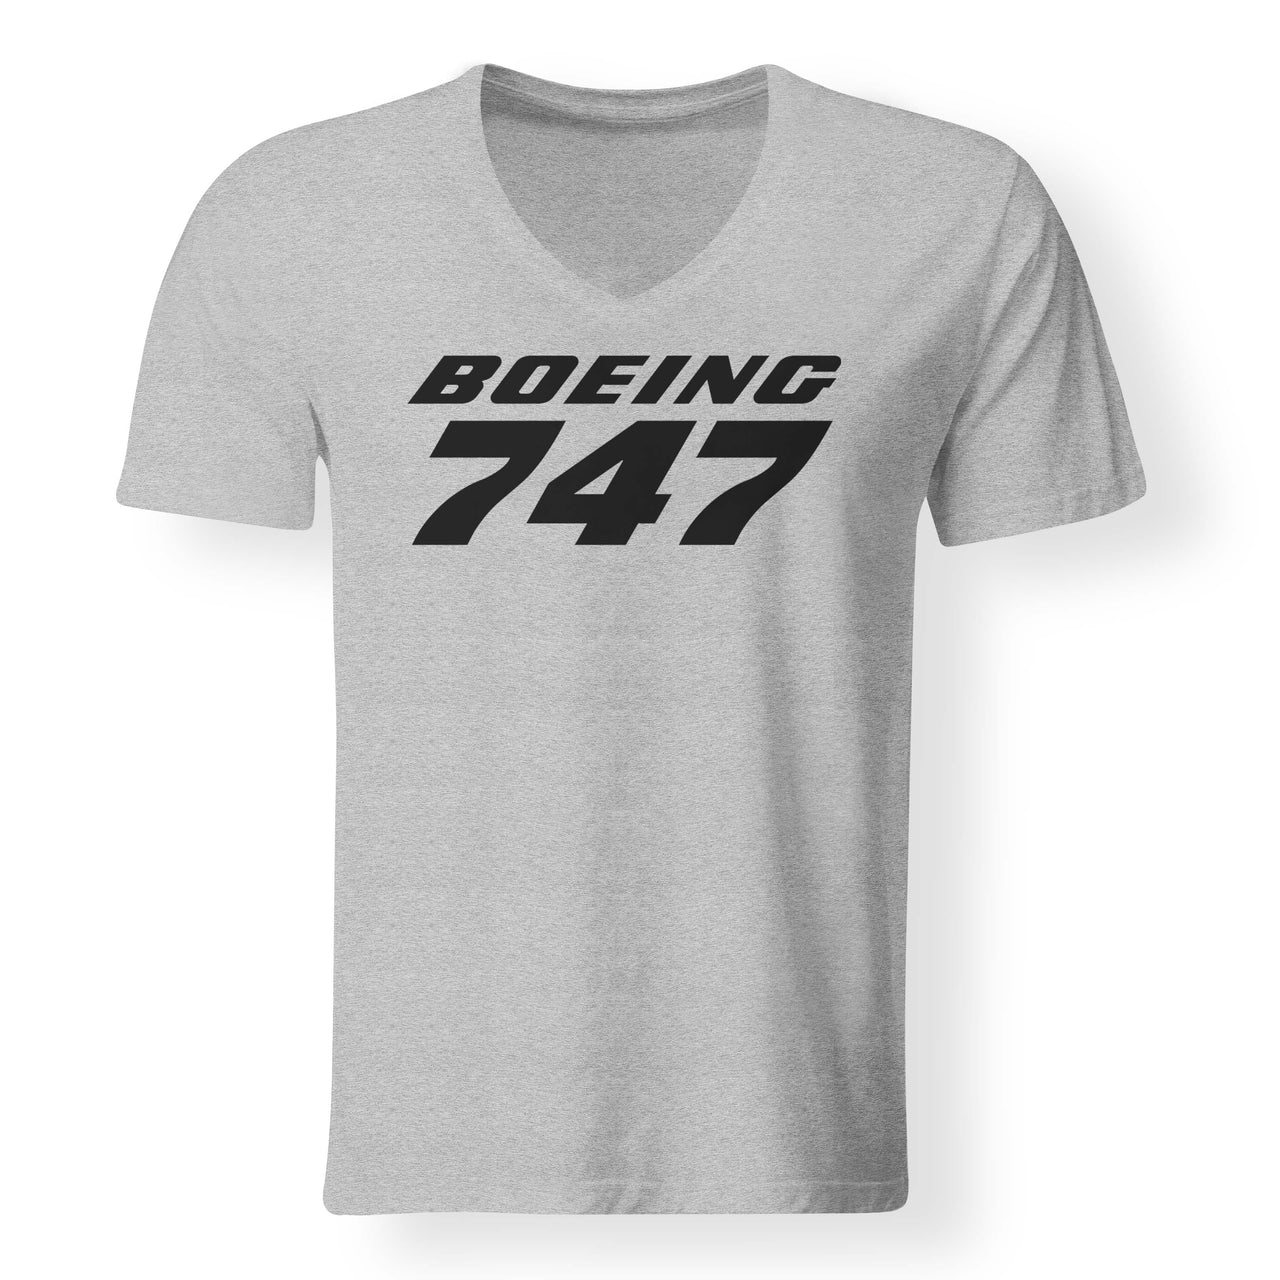 Boeing 747 & Text Designed V-Neck T-Shirts